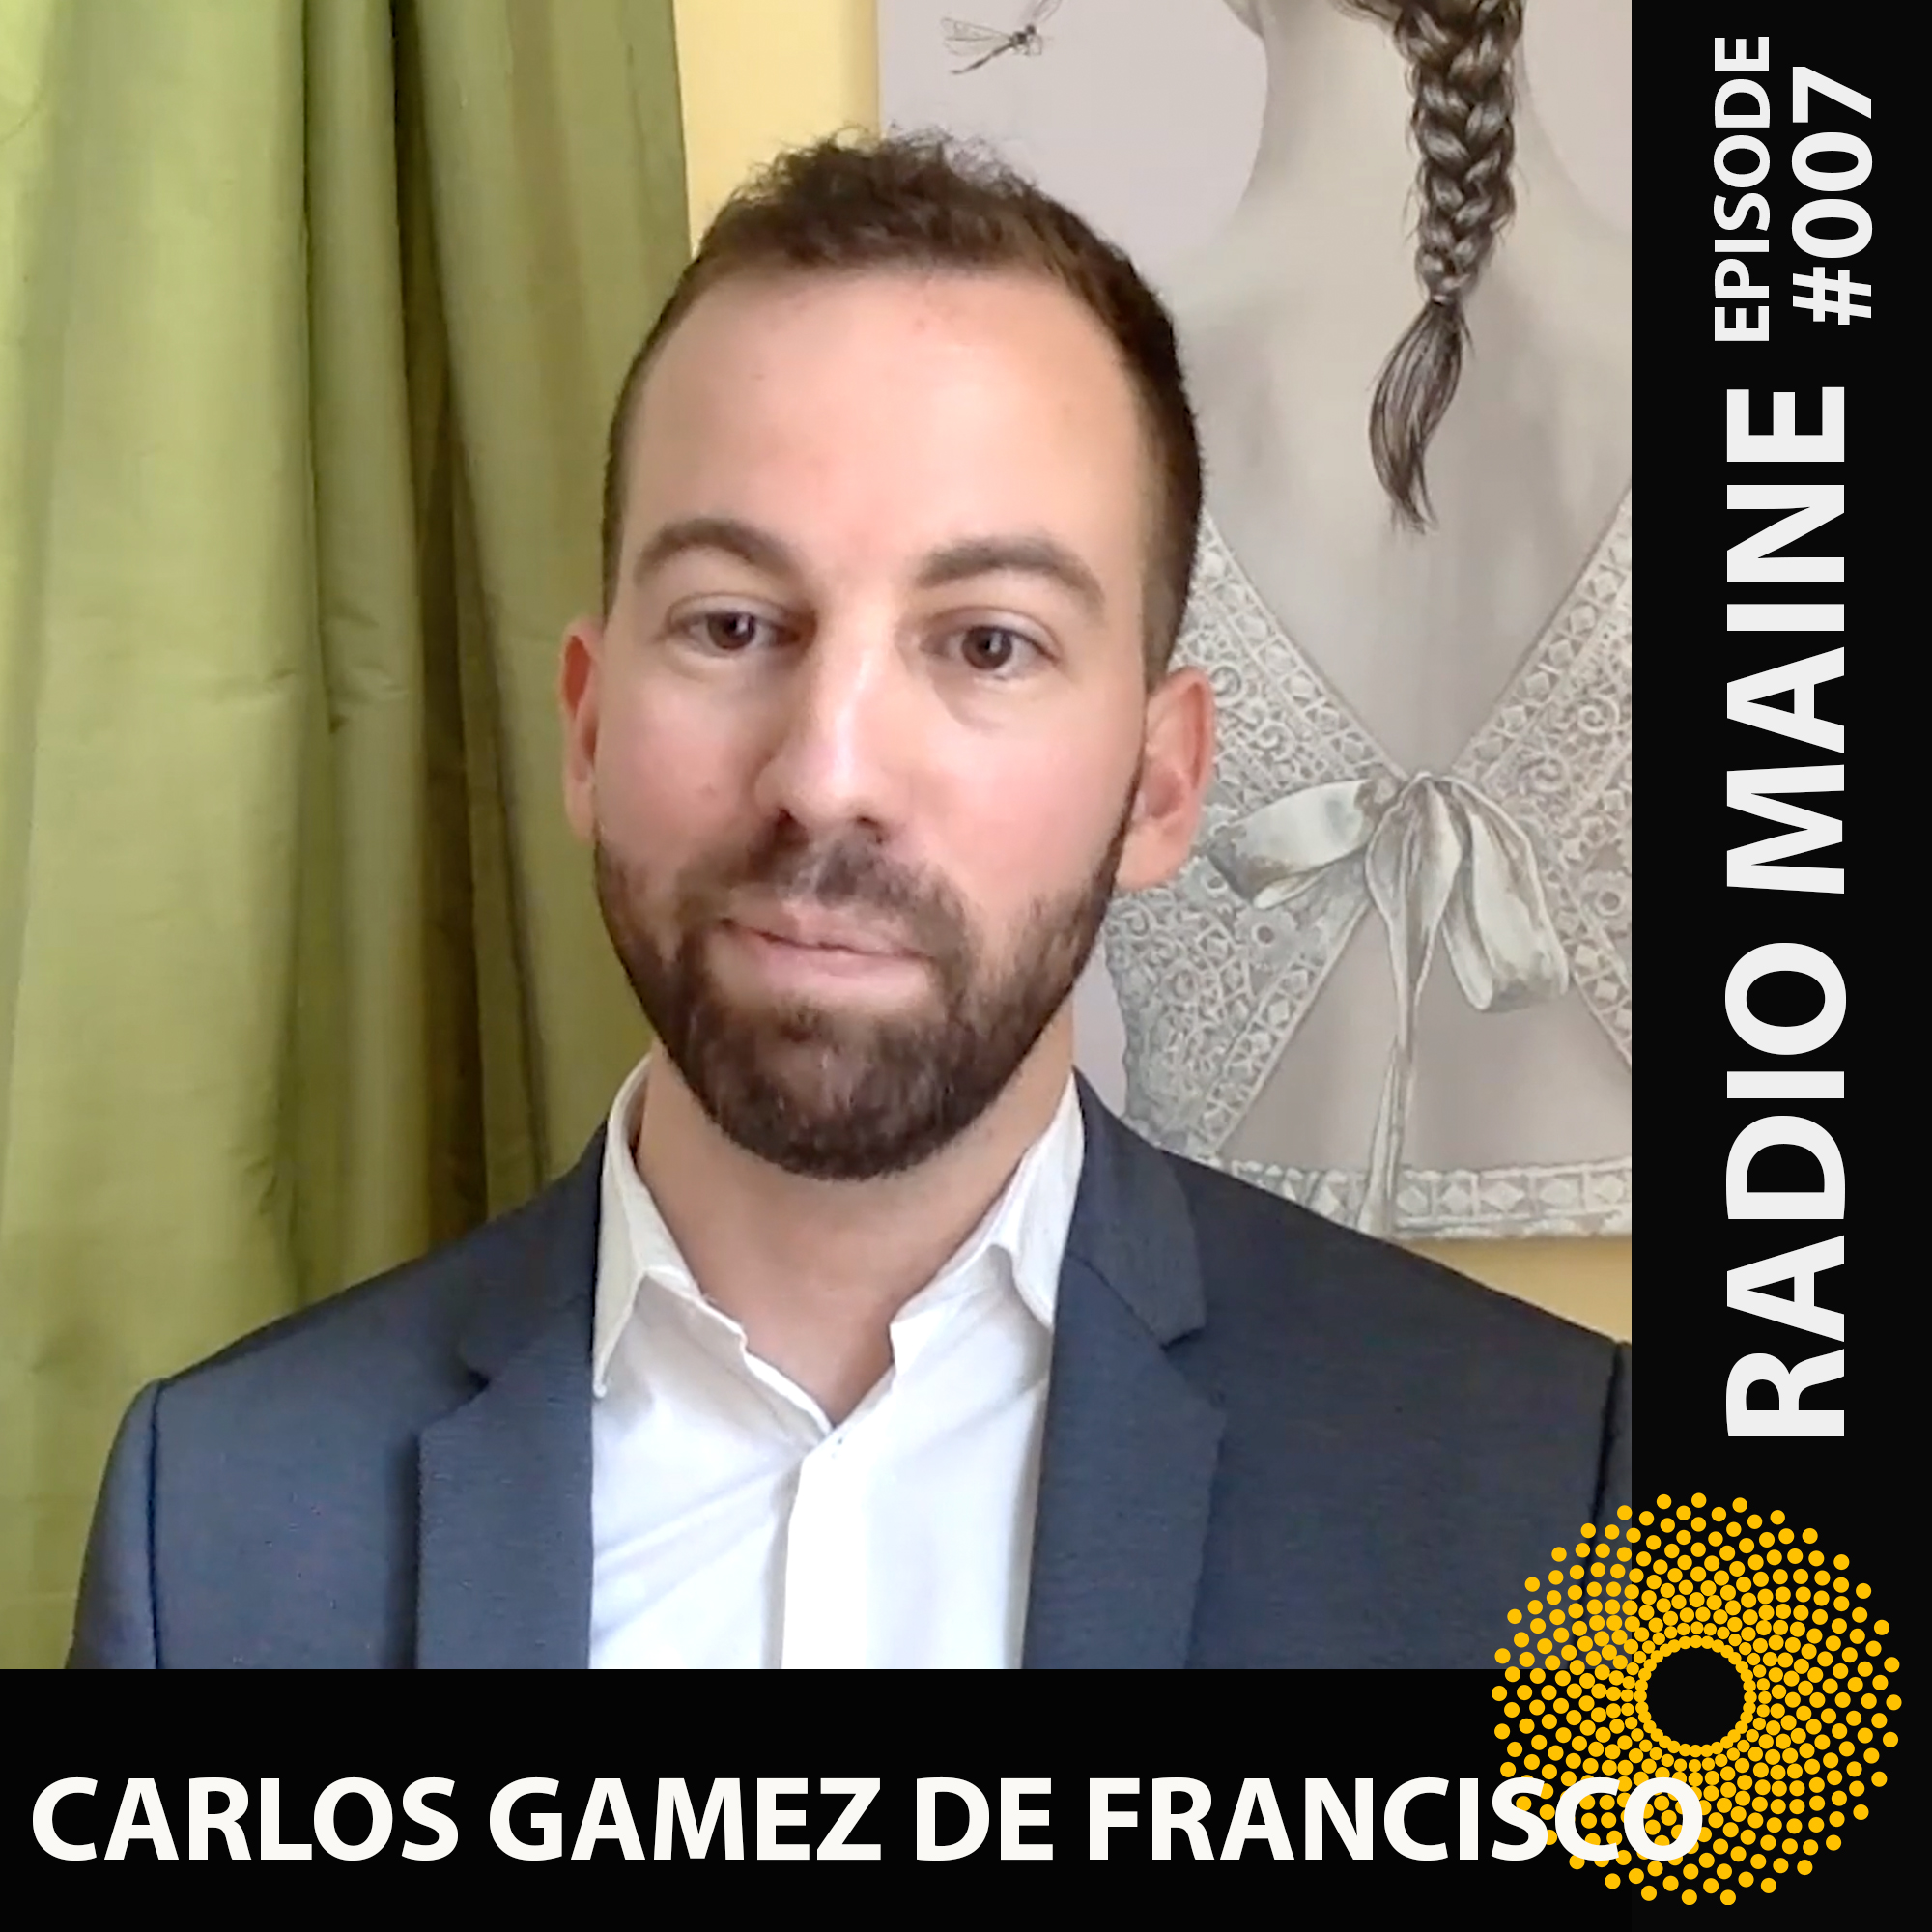 Artist Carlos Gamez de Francisco interviewed on Radio Maine with Dr. Lisa Belisle